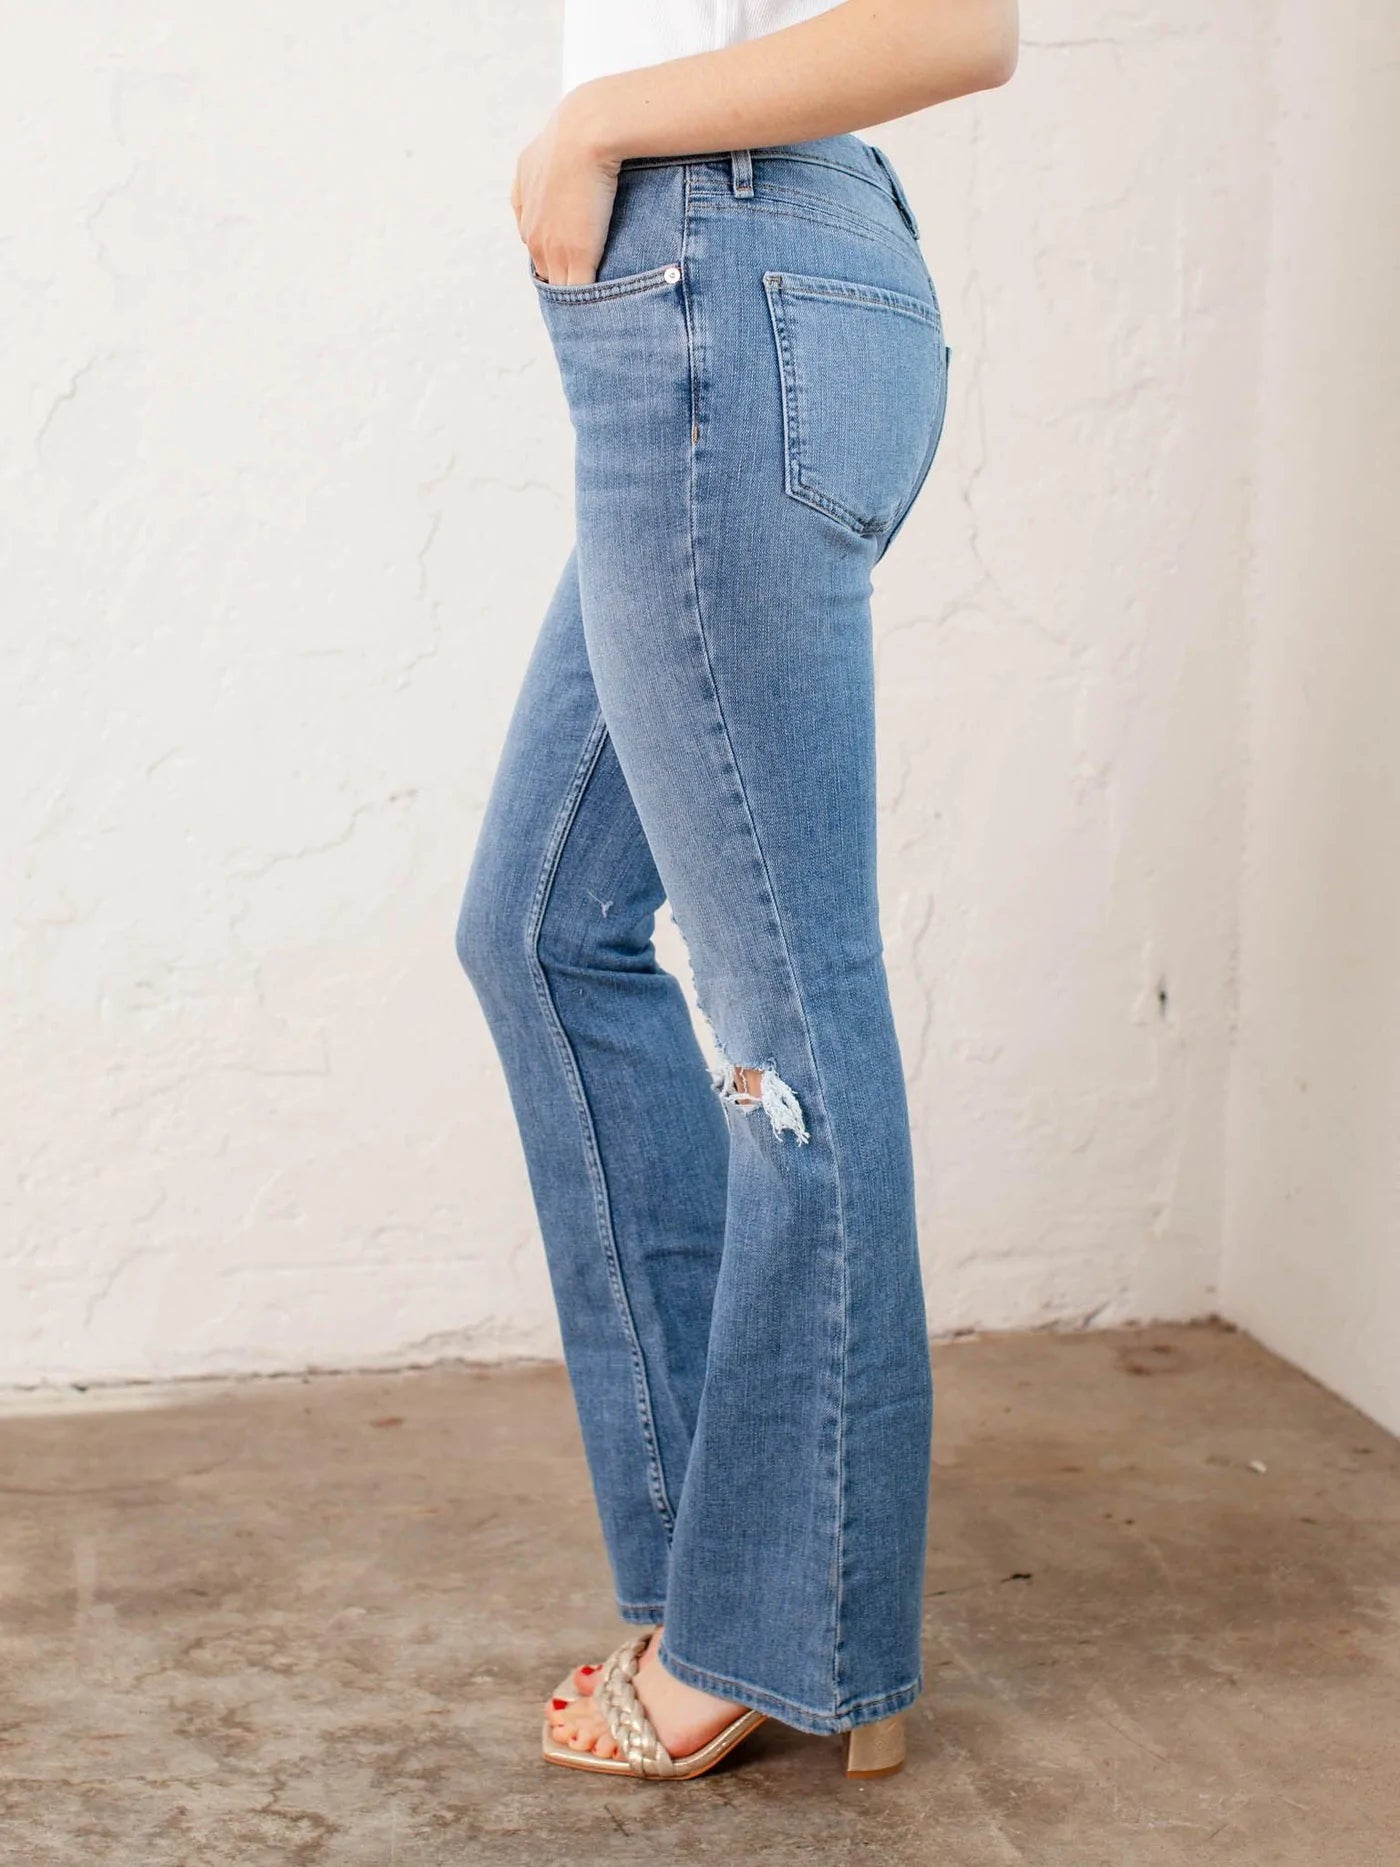 NEW Free People Carmen Flare Denim Jeans (6/8 or 31)